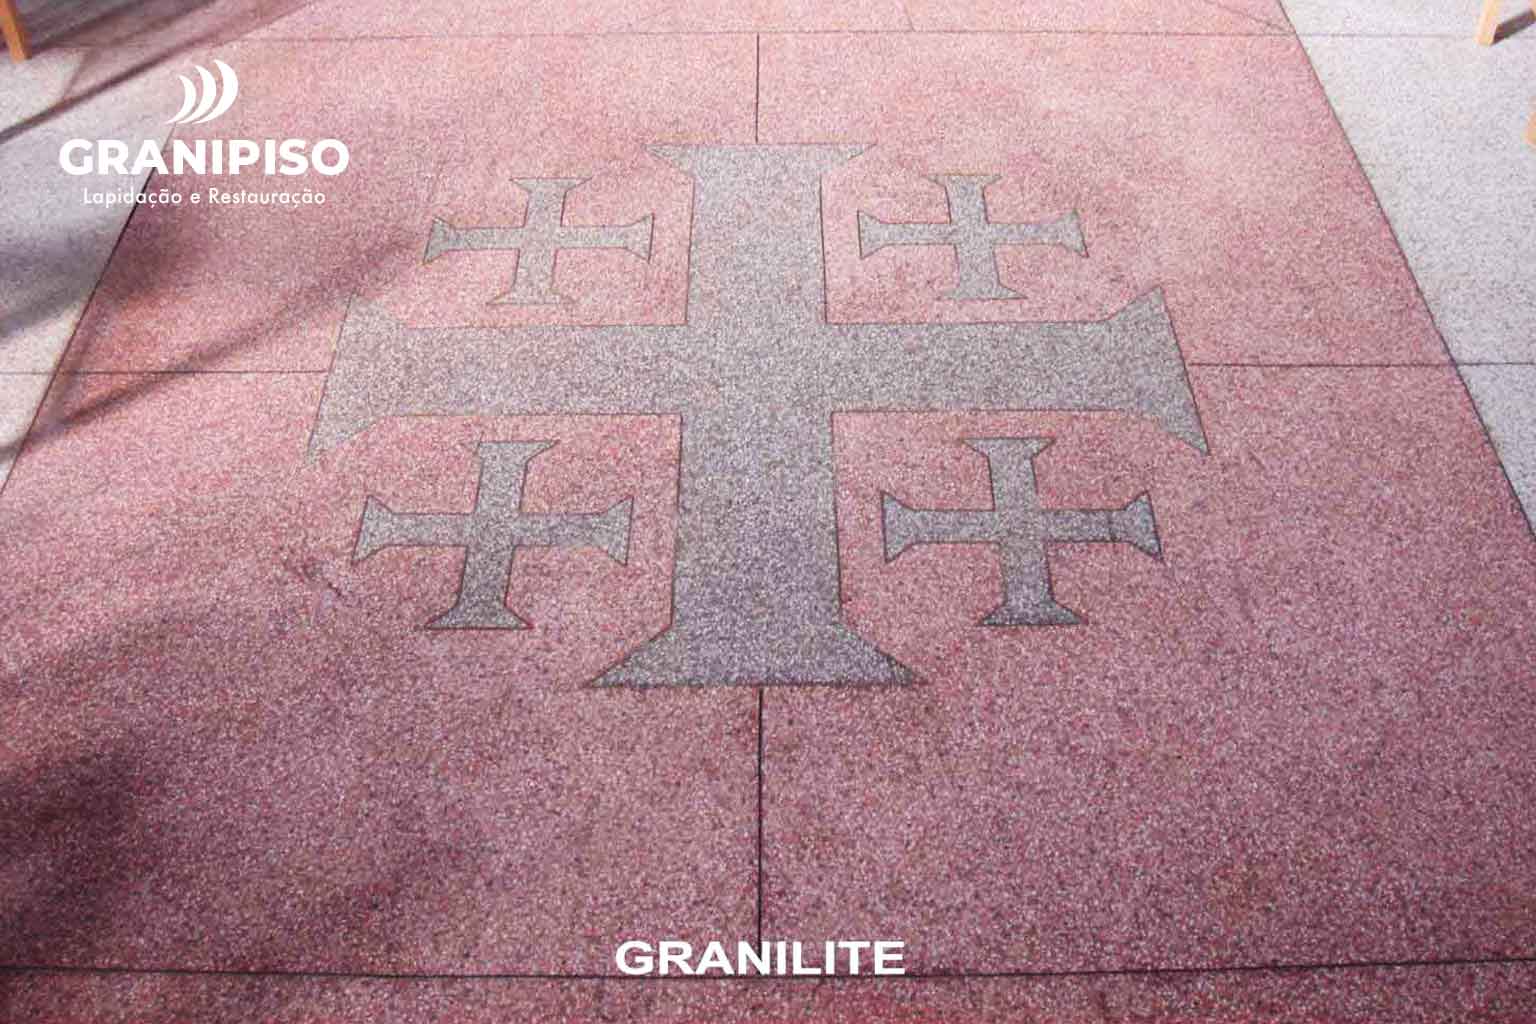 granilite-salas-igreja-matriz-lambari-granipiso-restauracao-e-lapidacao-01